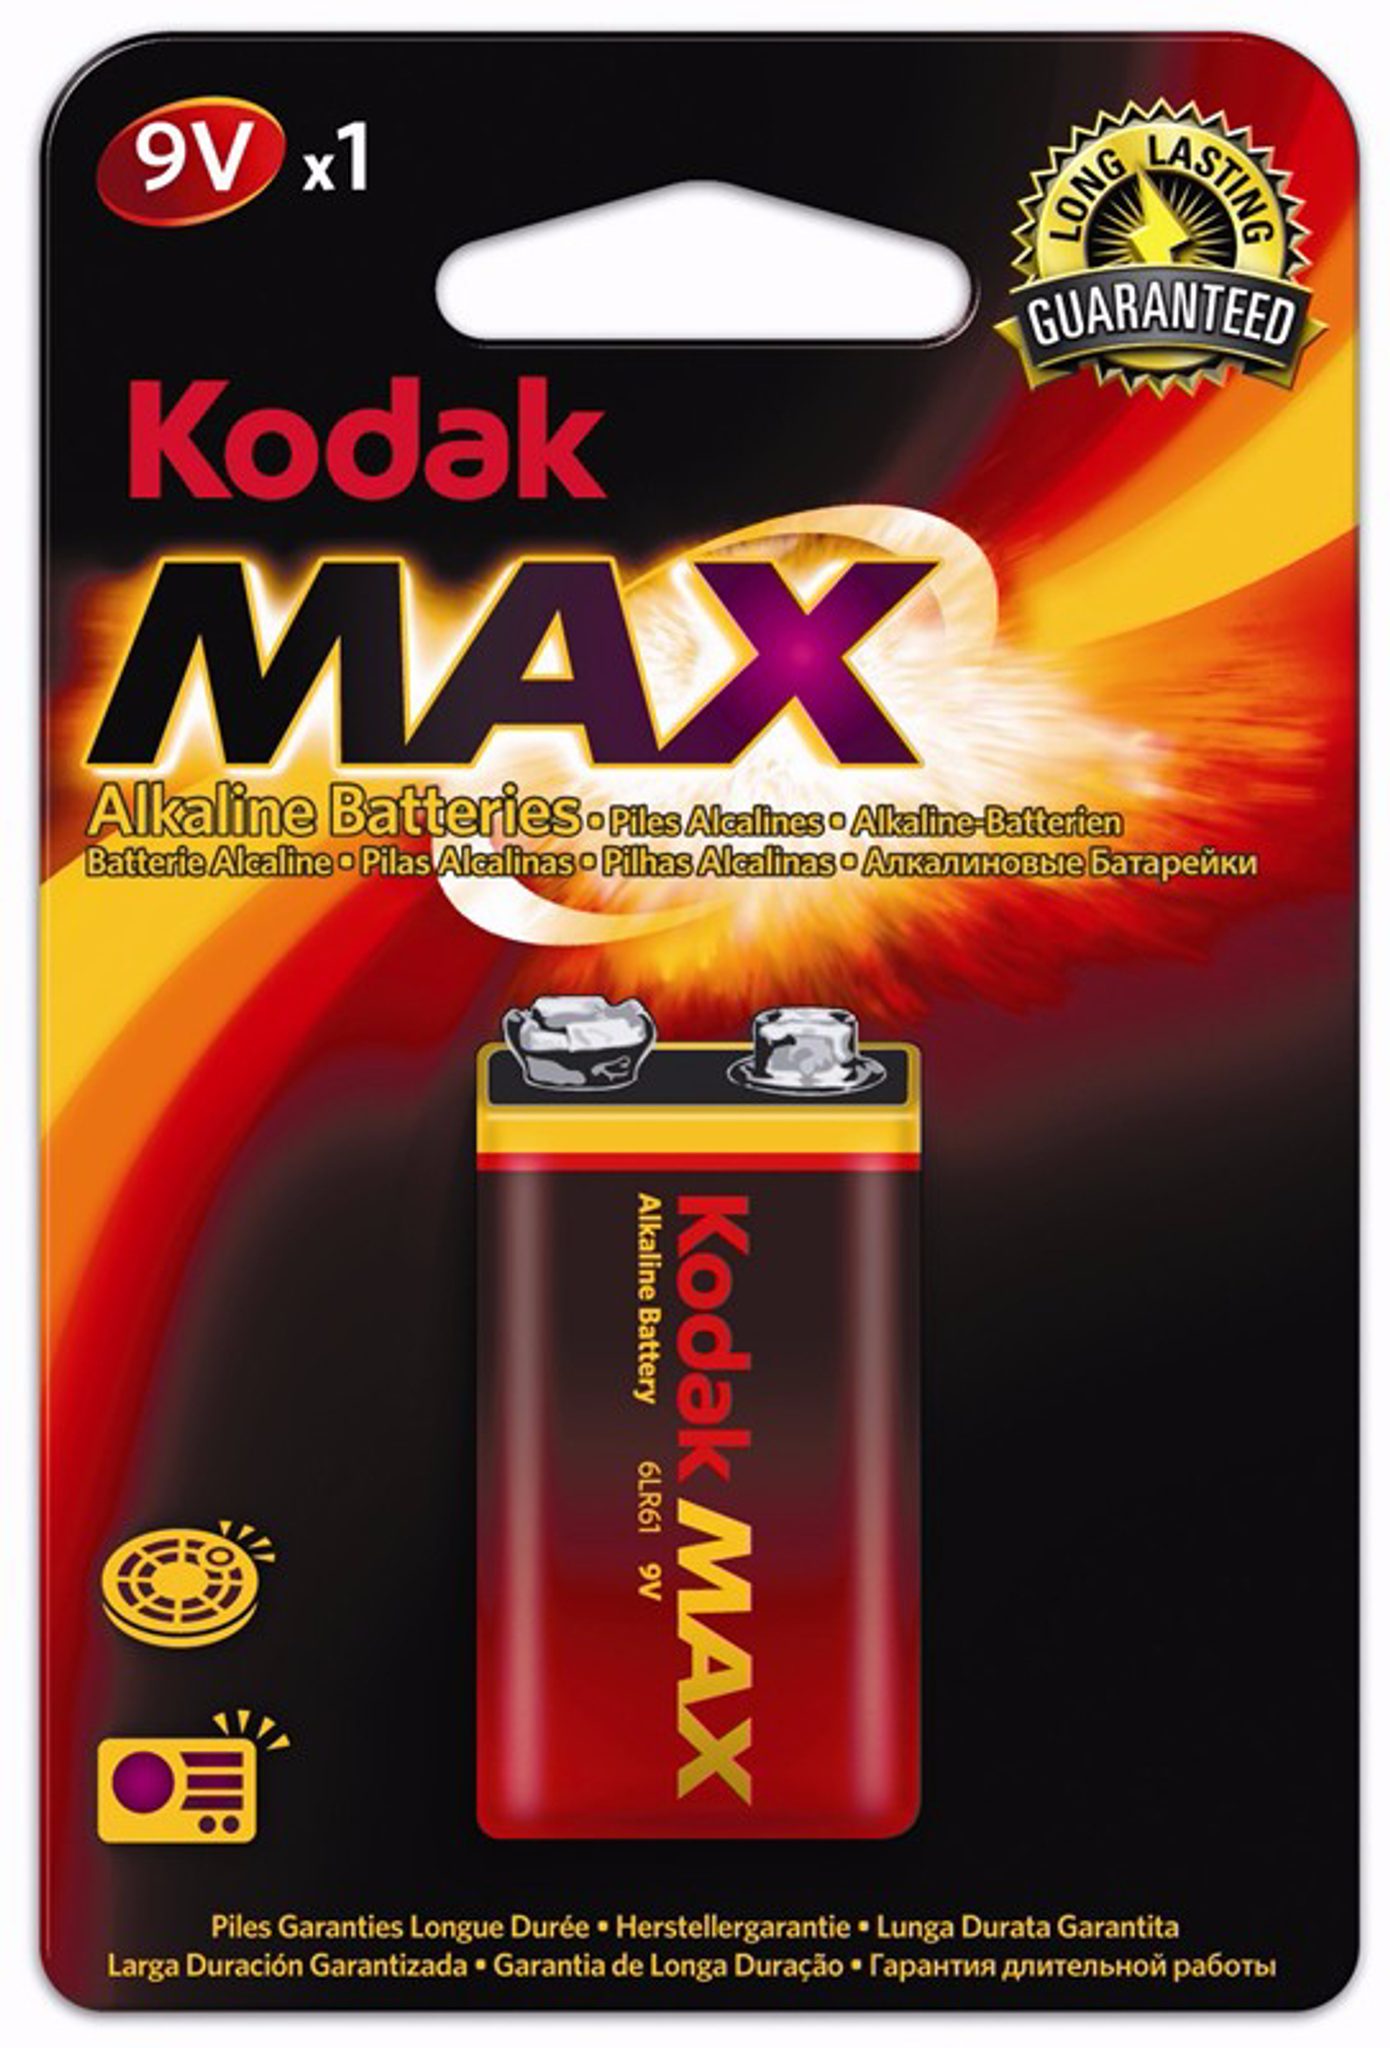 Kodak Max 9V